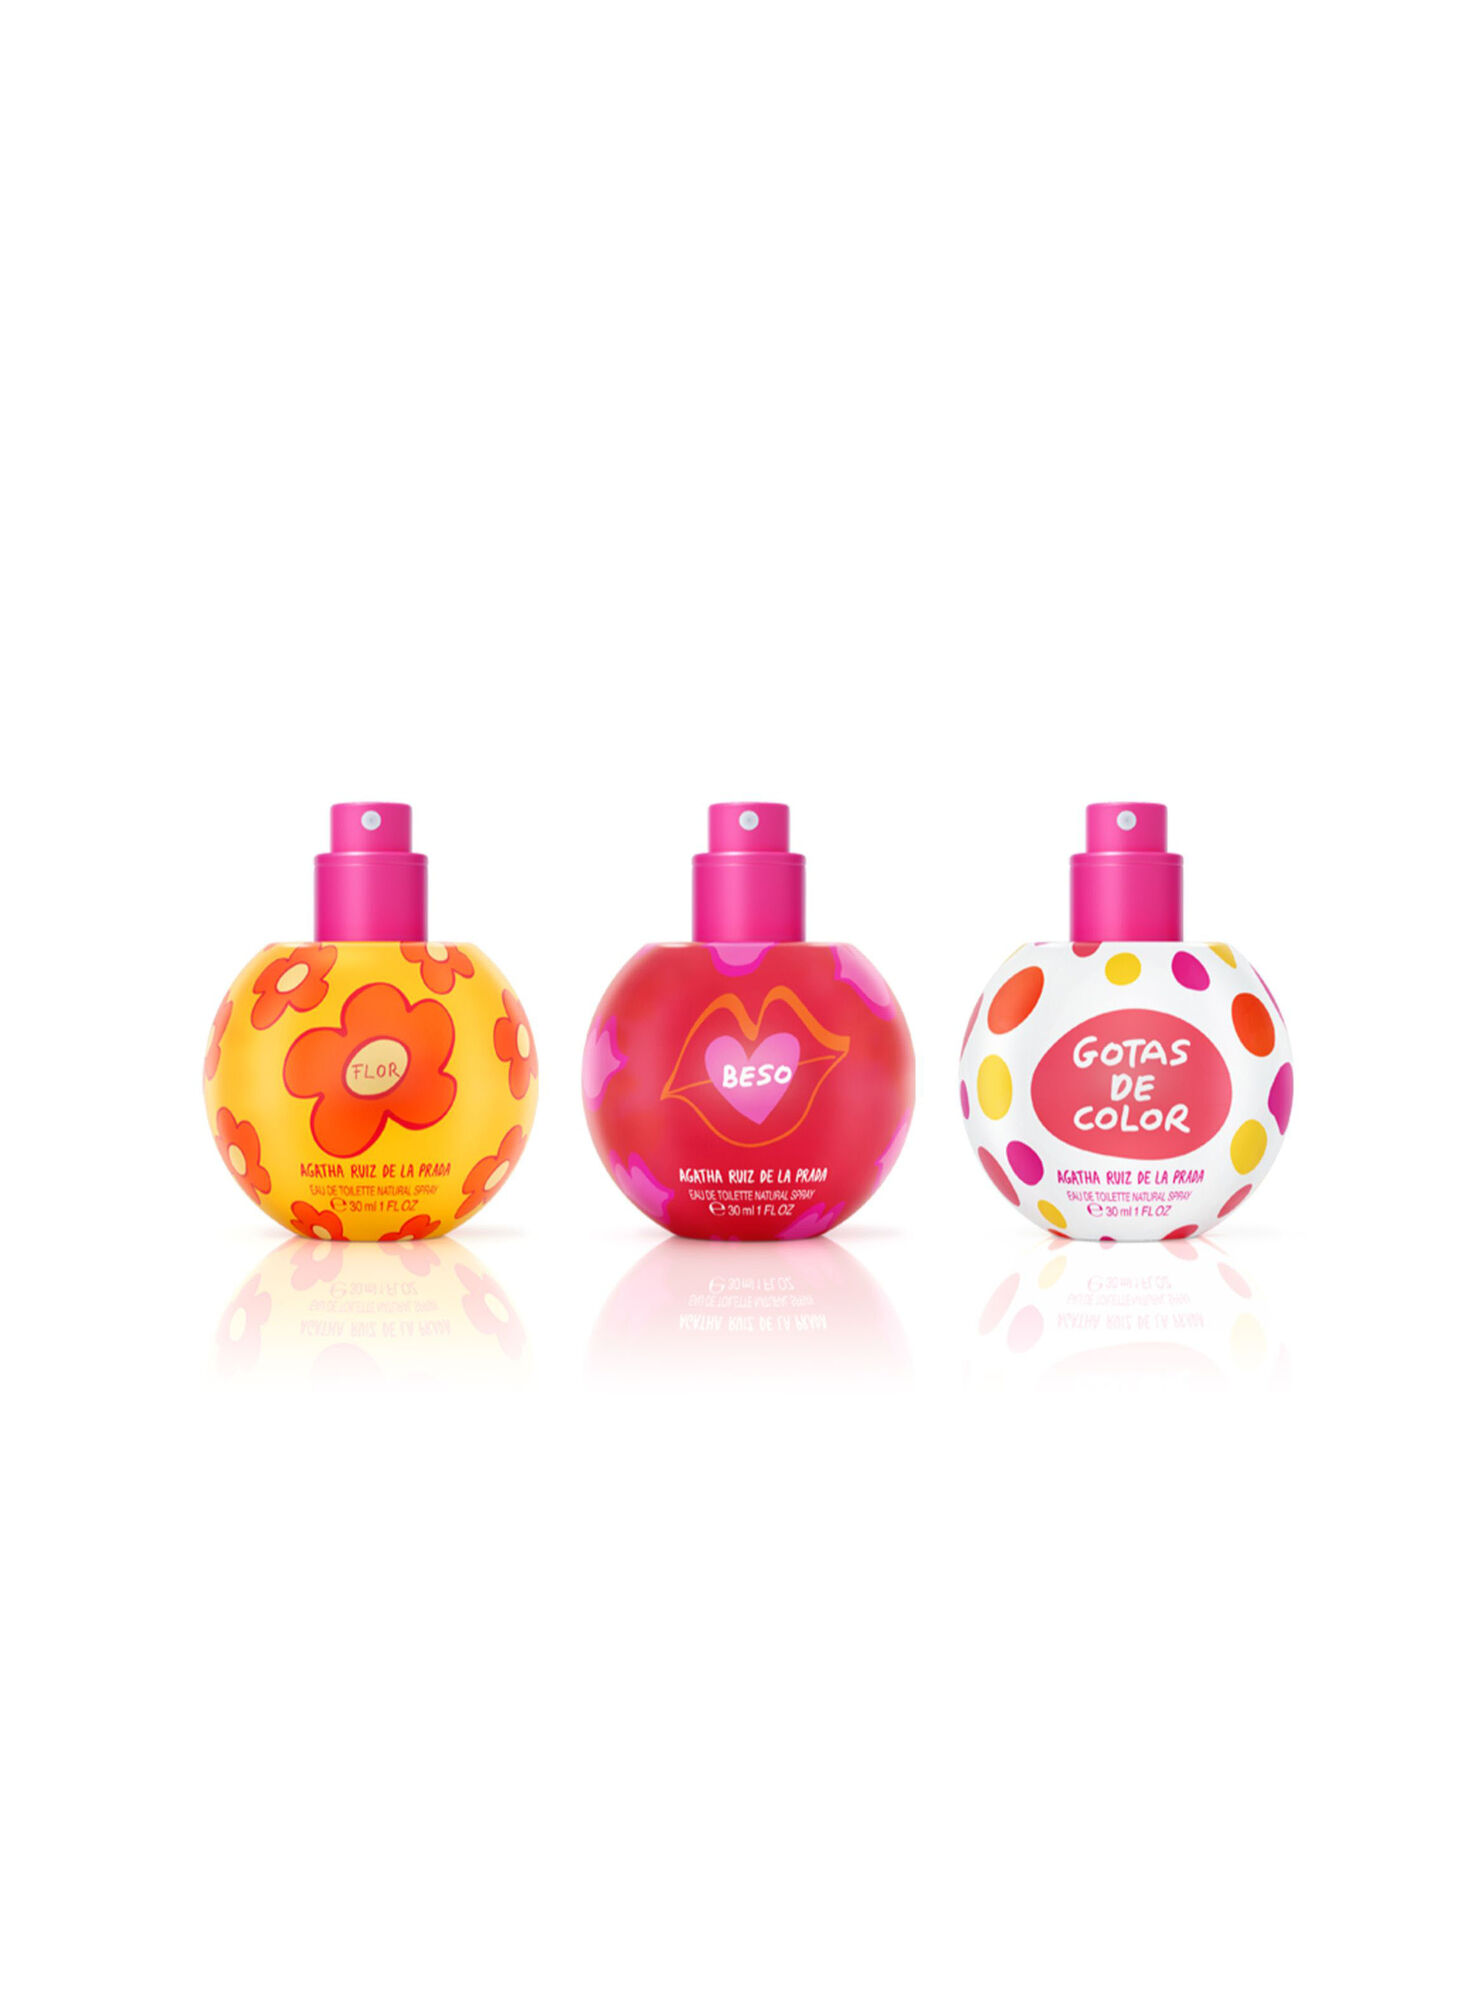 Set Perfumes Agatha Ruiz de la Prada Bubbles Gotas de Color EDT 30 ml +  Beso DT 30 ml + Flor EDT 30 ml - Sets de Perfumes 